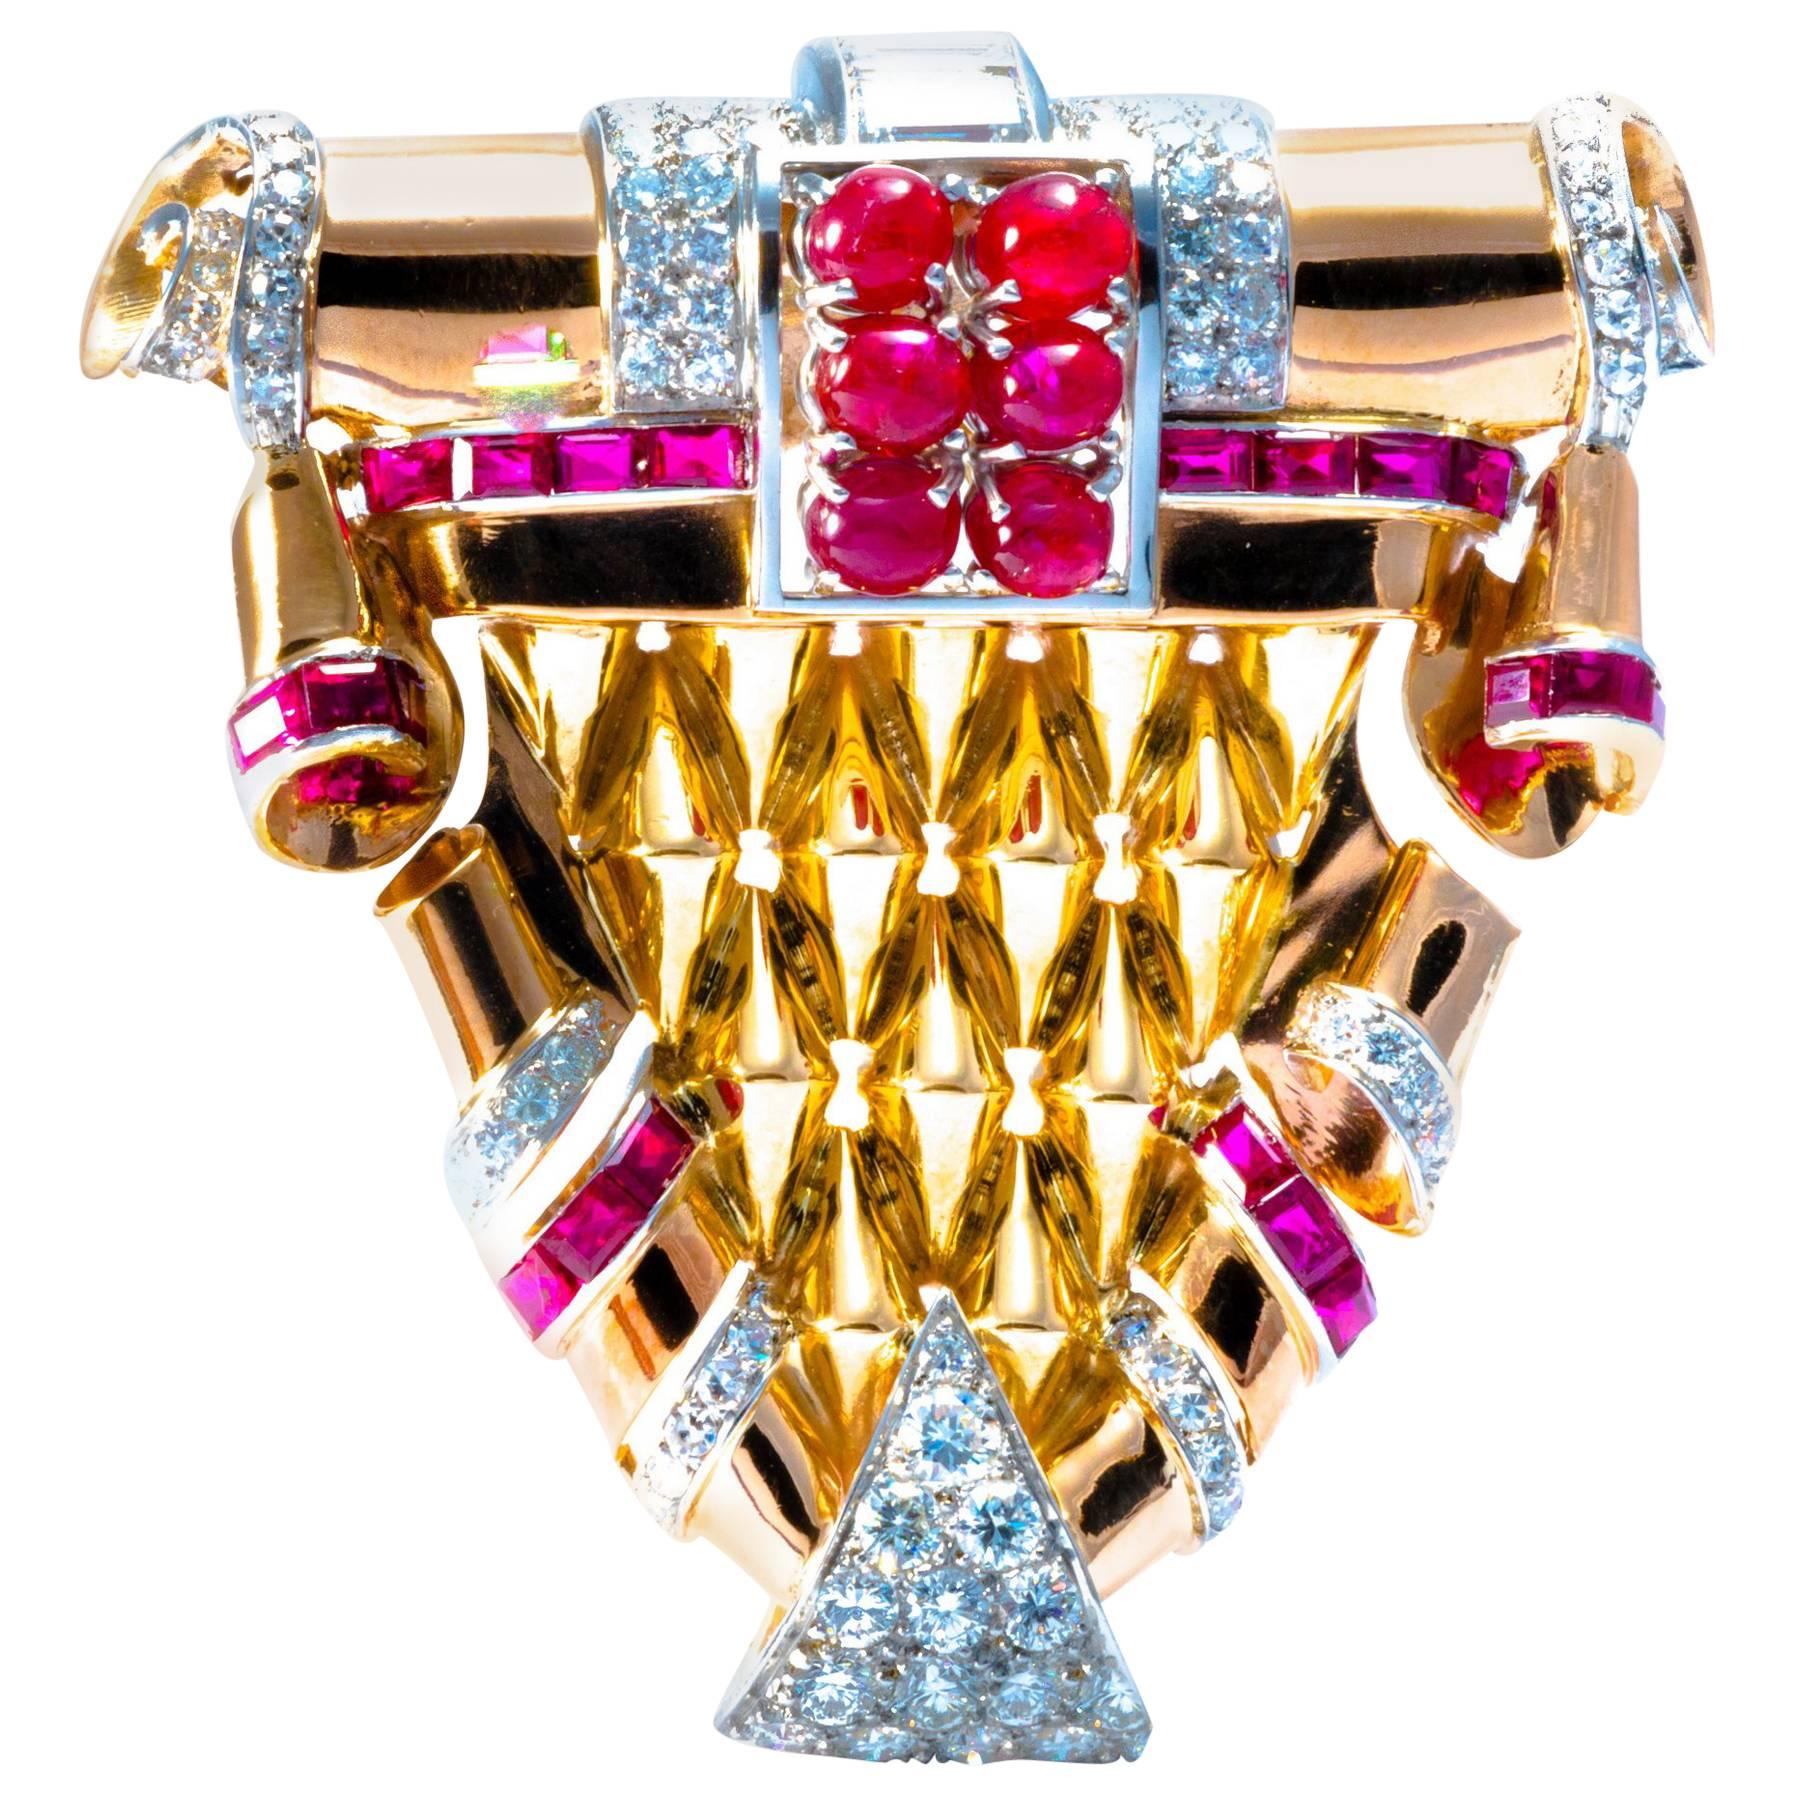 Ansuini 1940 Stemma Design Diamond Rubies 18K Yellow Gold Pendant Necklace Pin For Sale